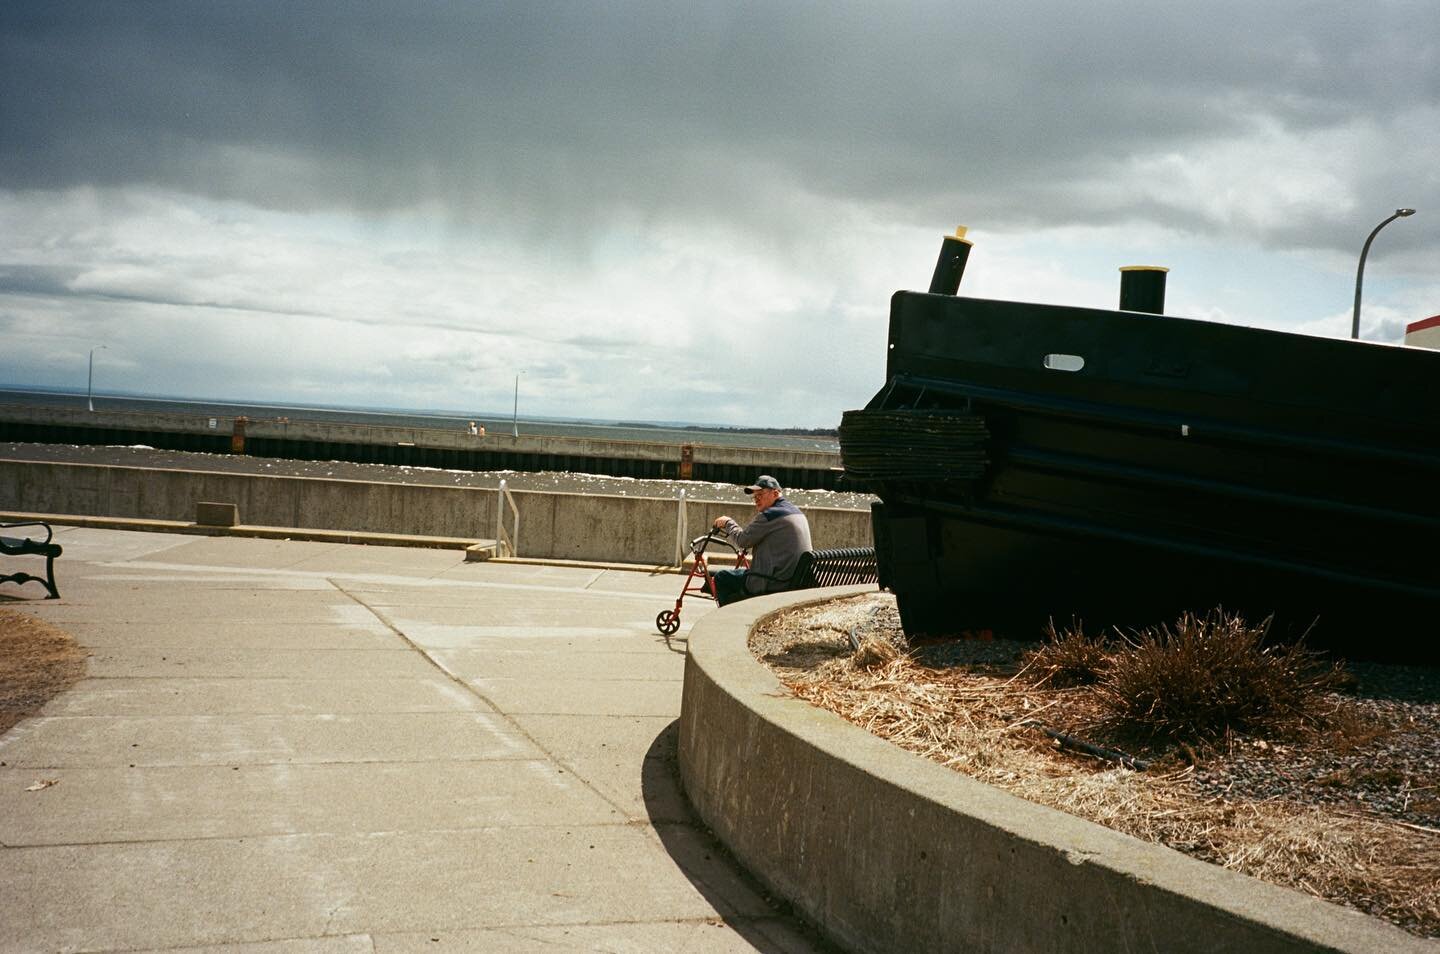 The old man waits 

Lake Superior, Duluth 
#35mmfilm #ektar100 #kodakprofessional